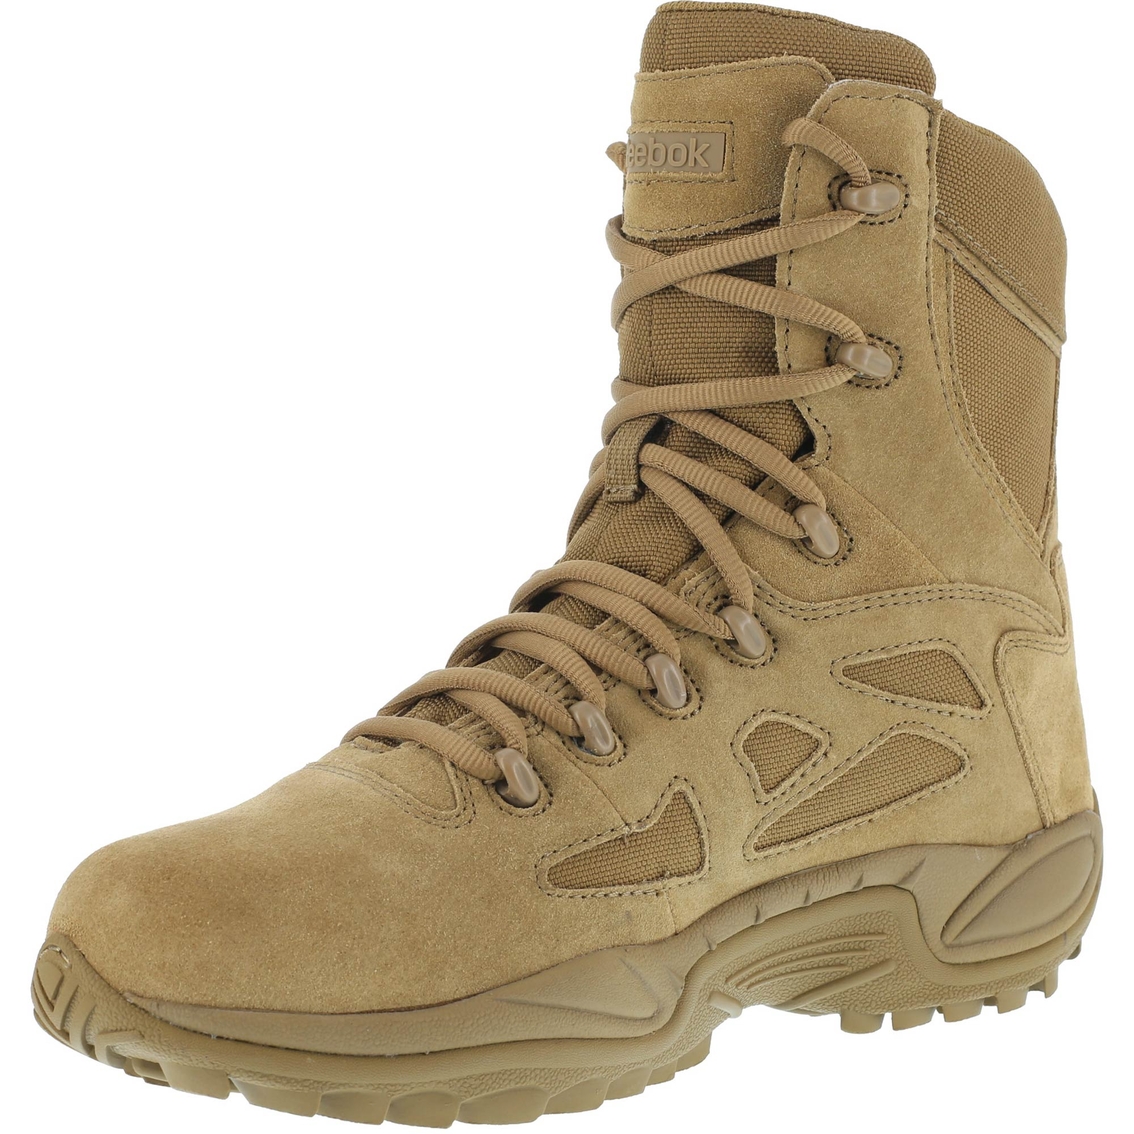 Reebok Men's Rapid Response AR670-1 Compliant Boots - Image 2 of 4